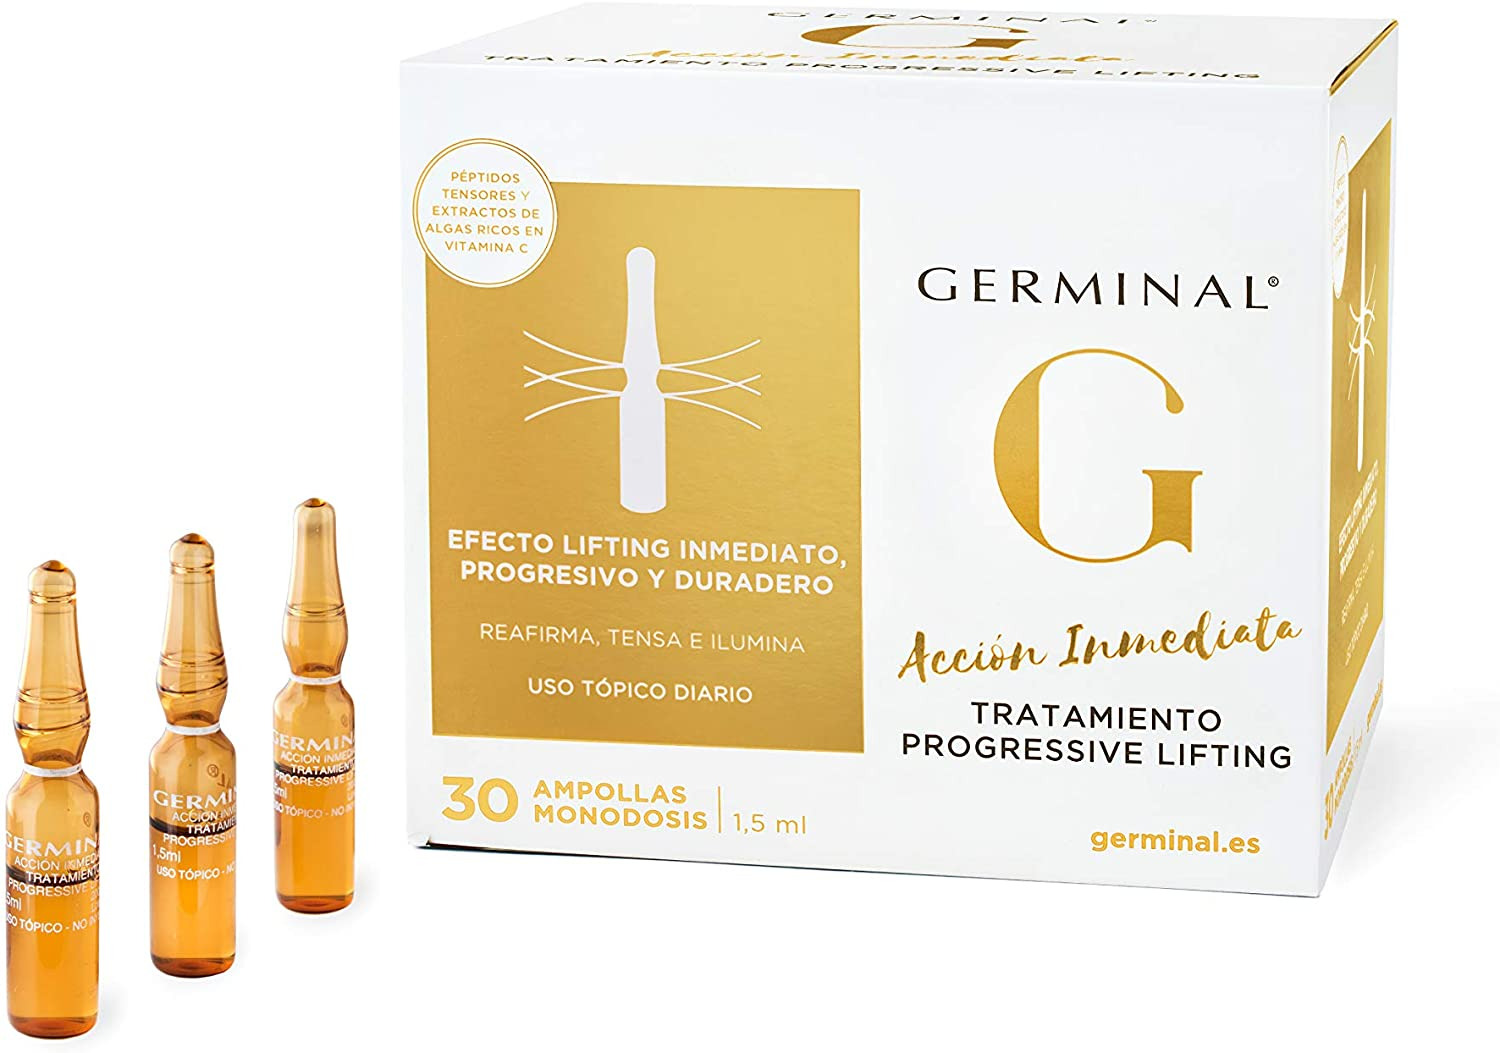 Germinal Immediate Action Progressive Lifting Treatment 30 Ampoules